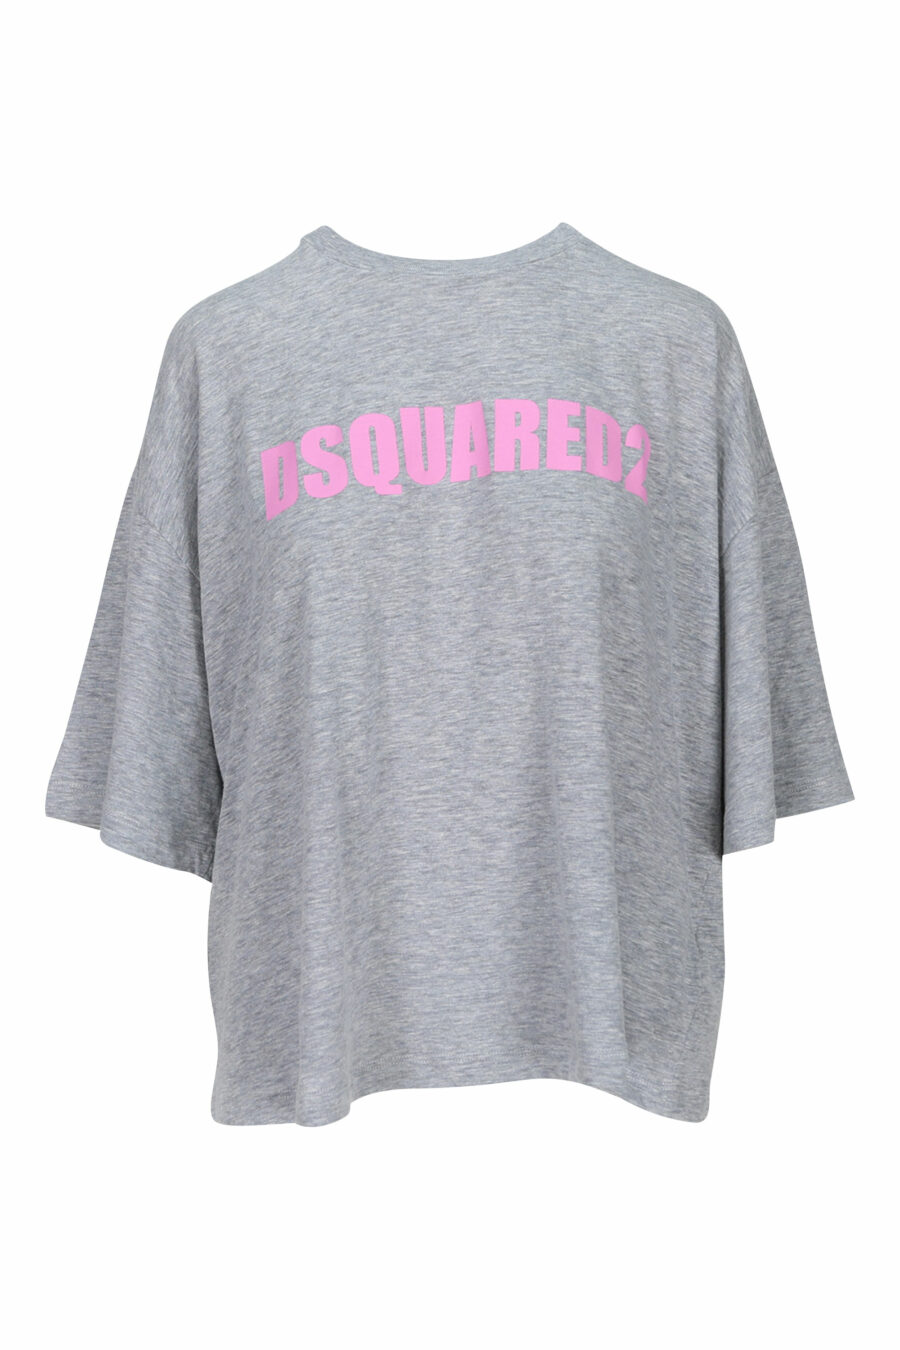 Camiseta gris oversize con maxilogo rosa - 8054148109882